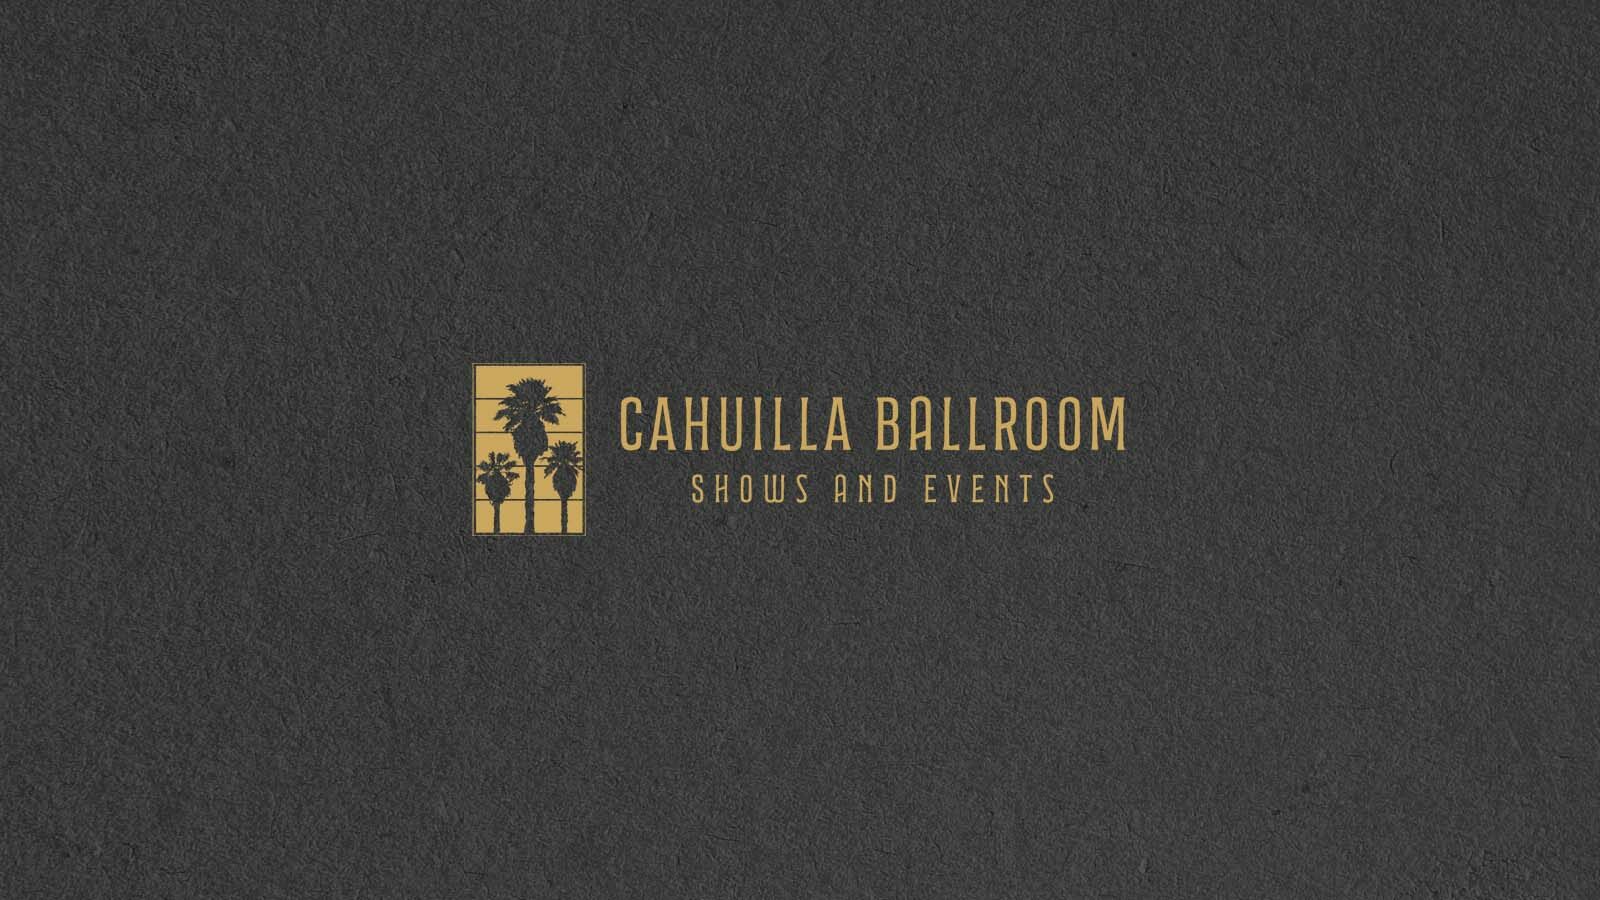 Cahuilla Ballroom